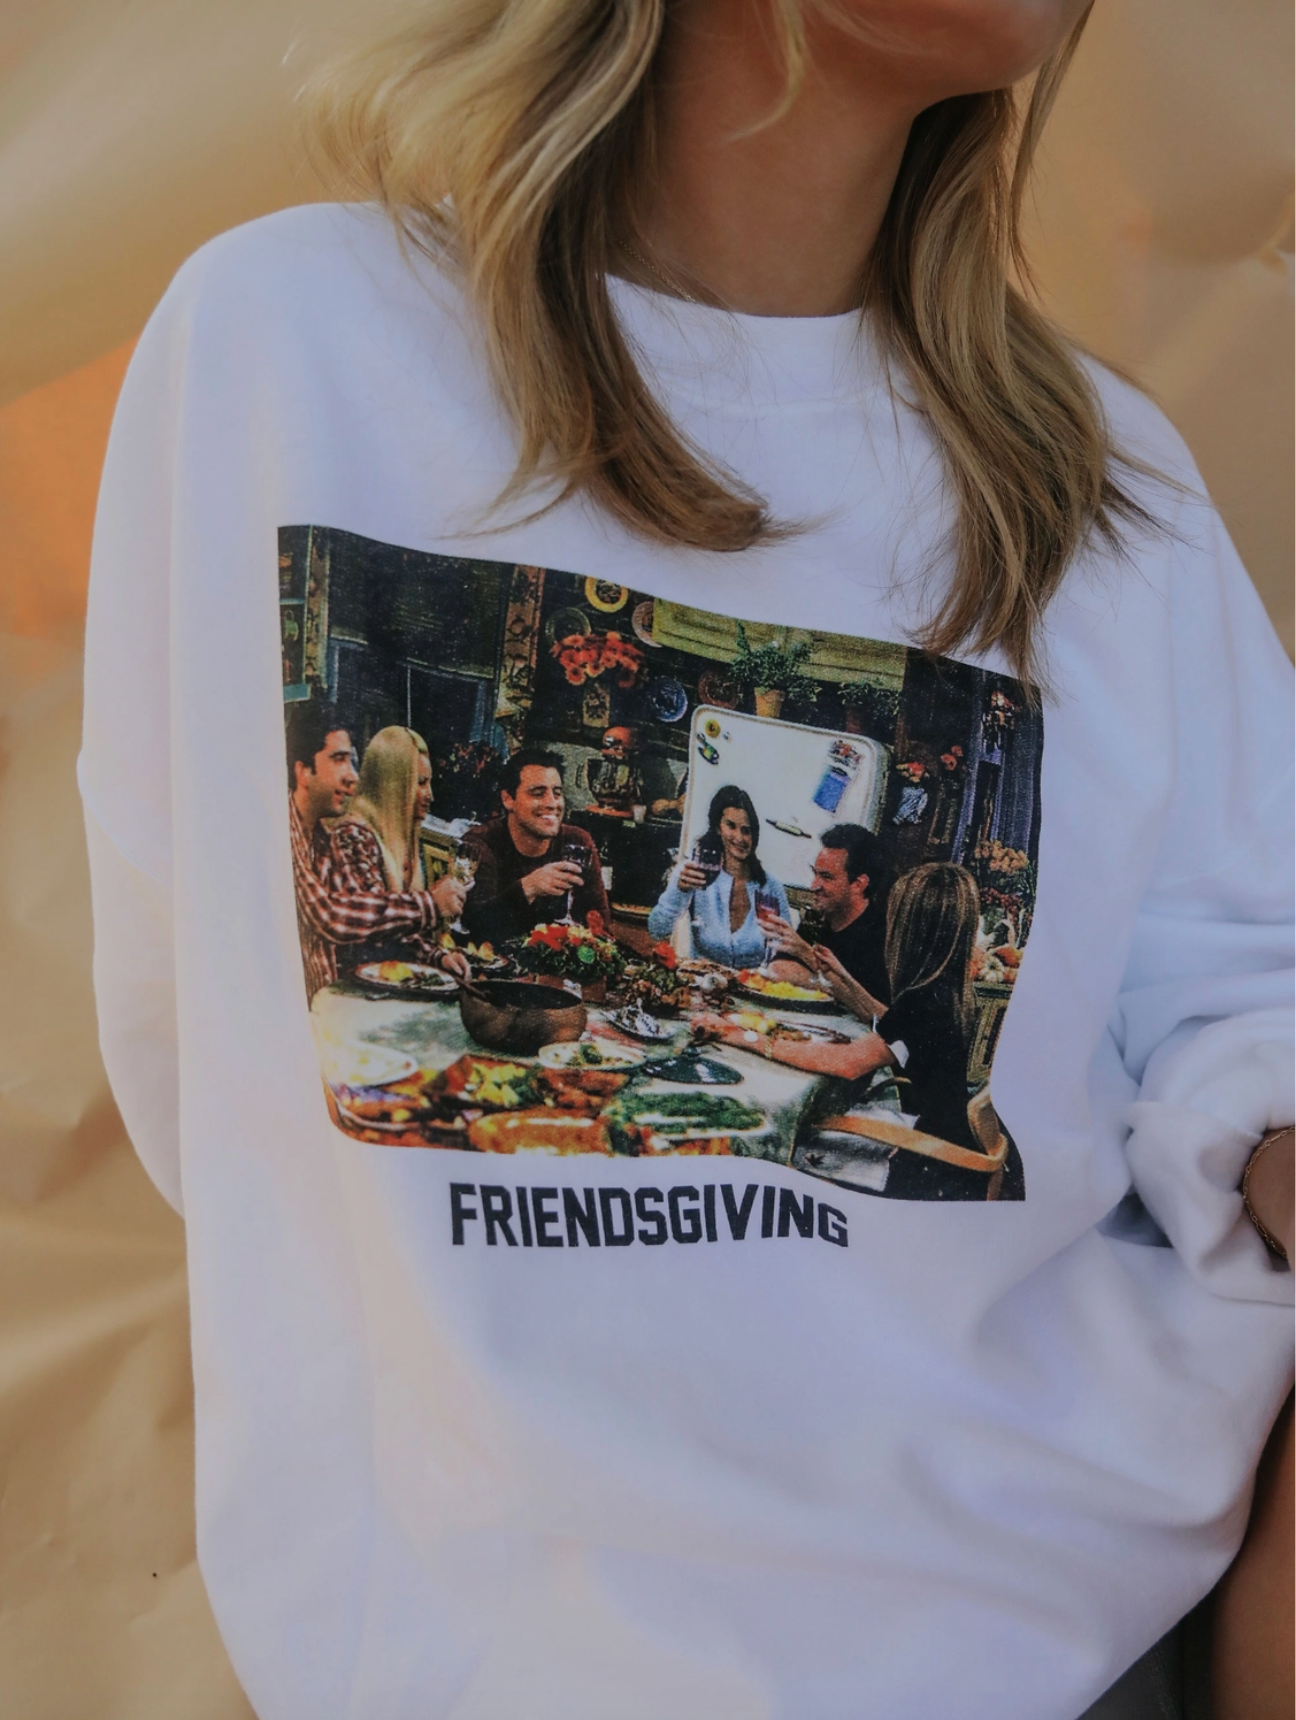 Friendsgiving Sweatshirt